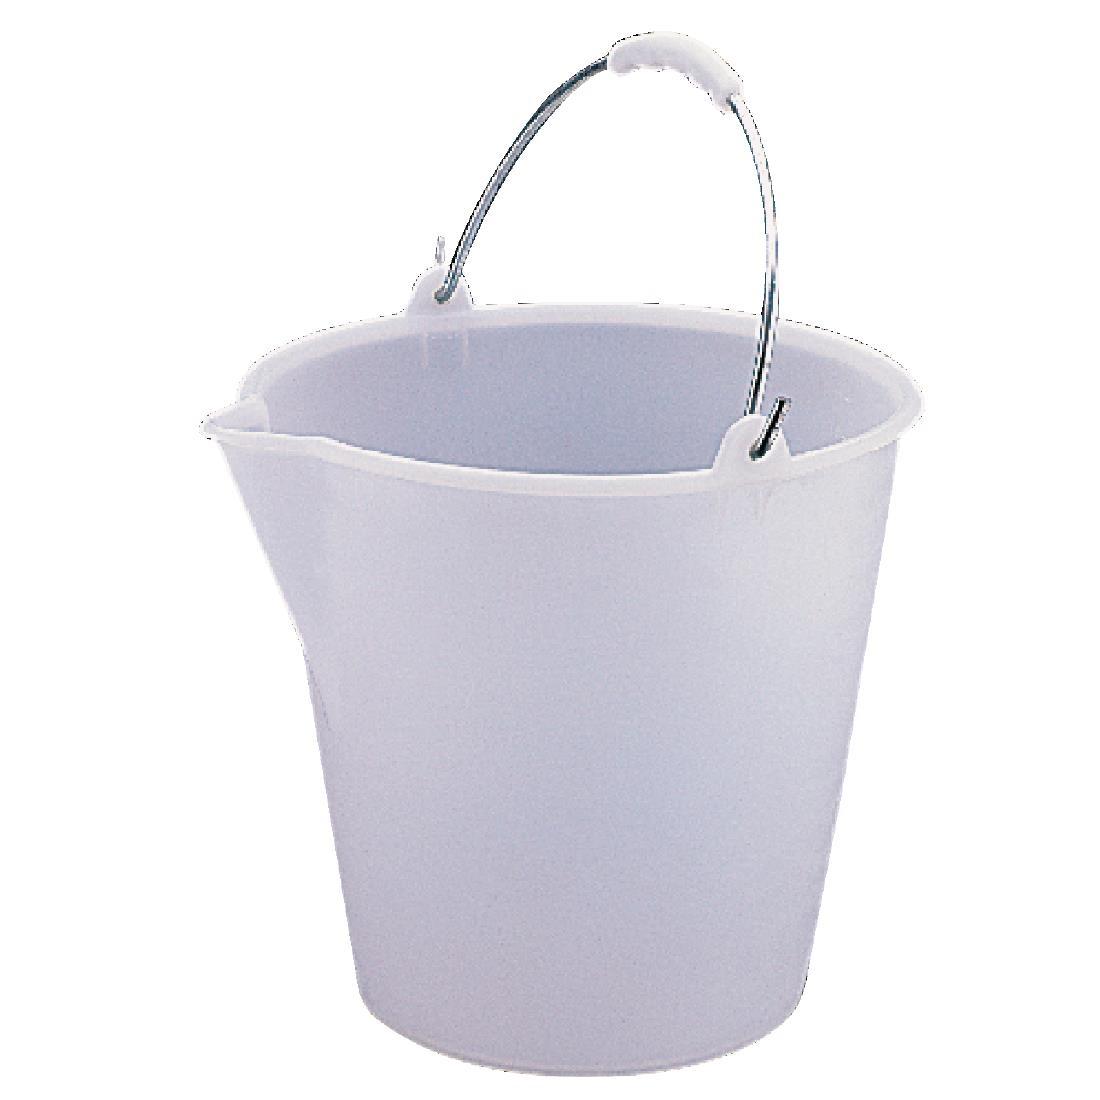 Jantex Heavy Duty Plastic Bucket White 12Ltr - L571  - 1